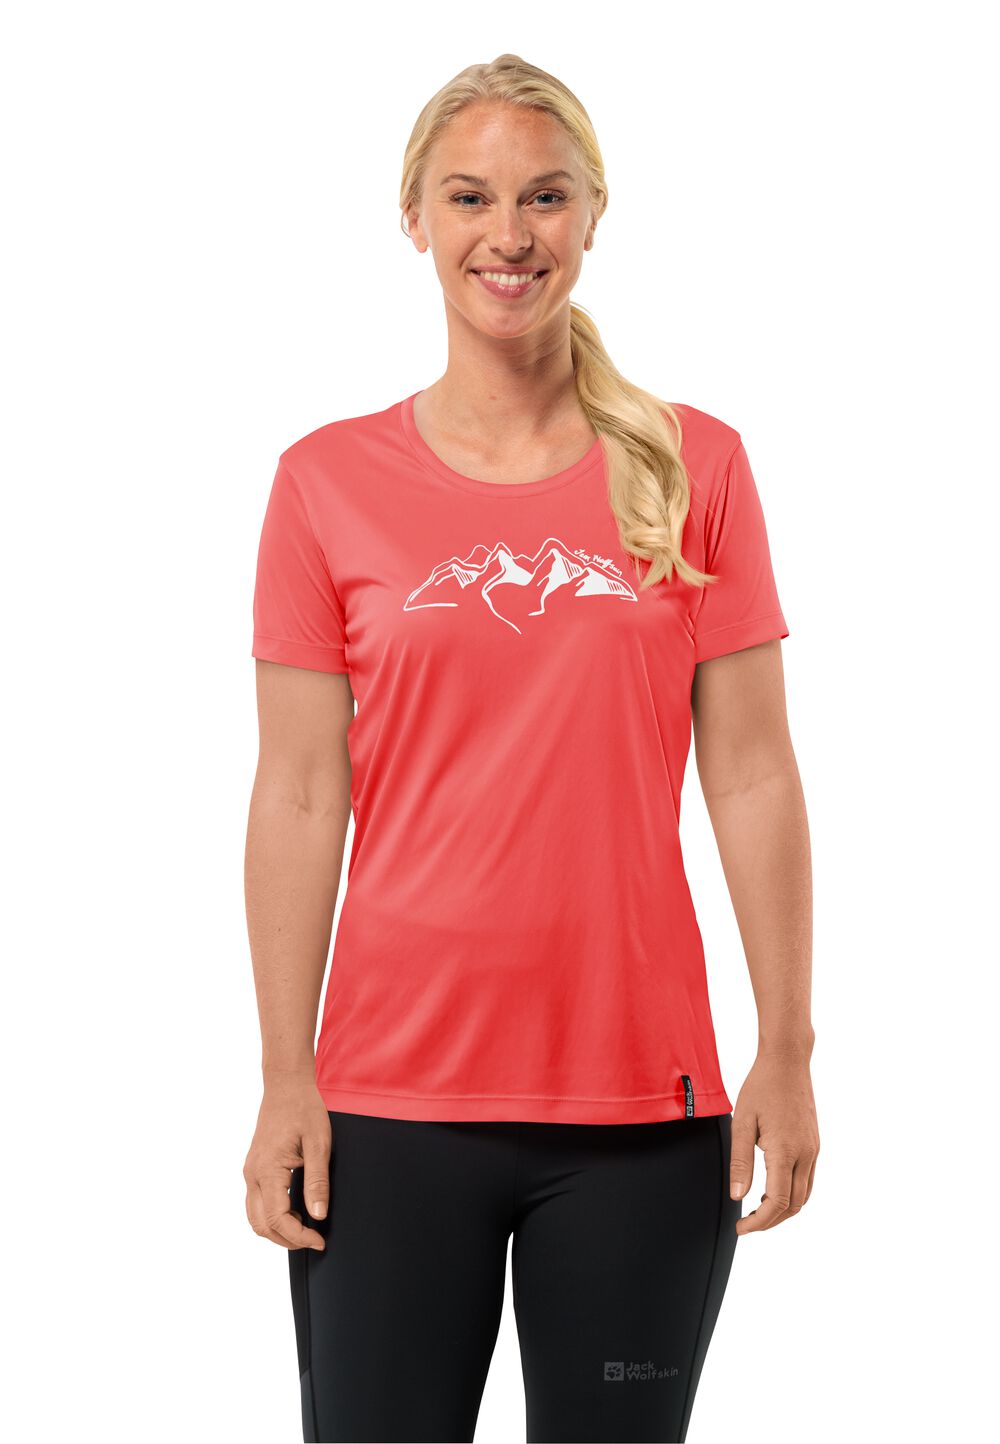 Jack Wolfskin Peak Graphic T-Shirt Women Functioneel shirt Dames XXL rood vibrant red